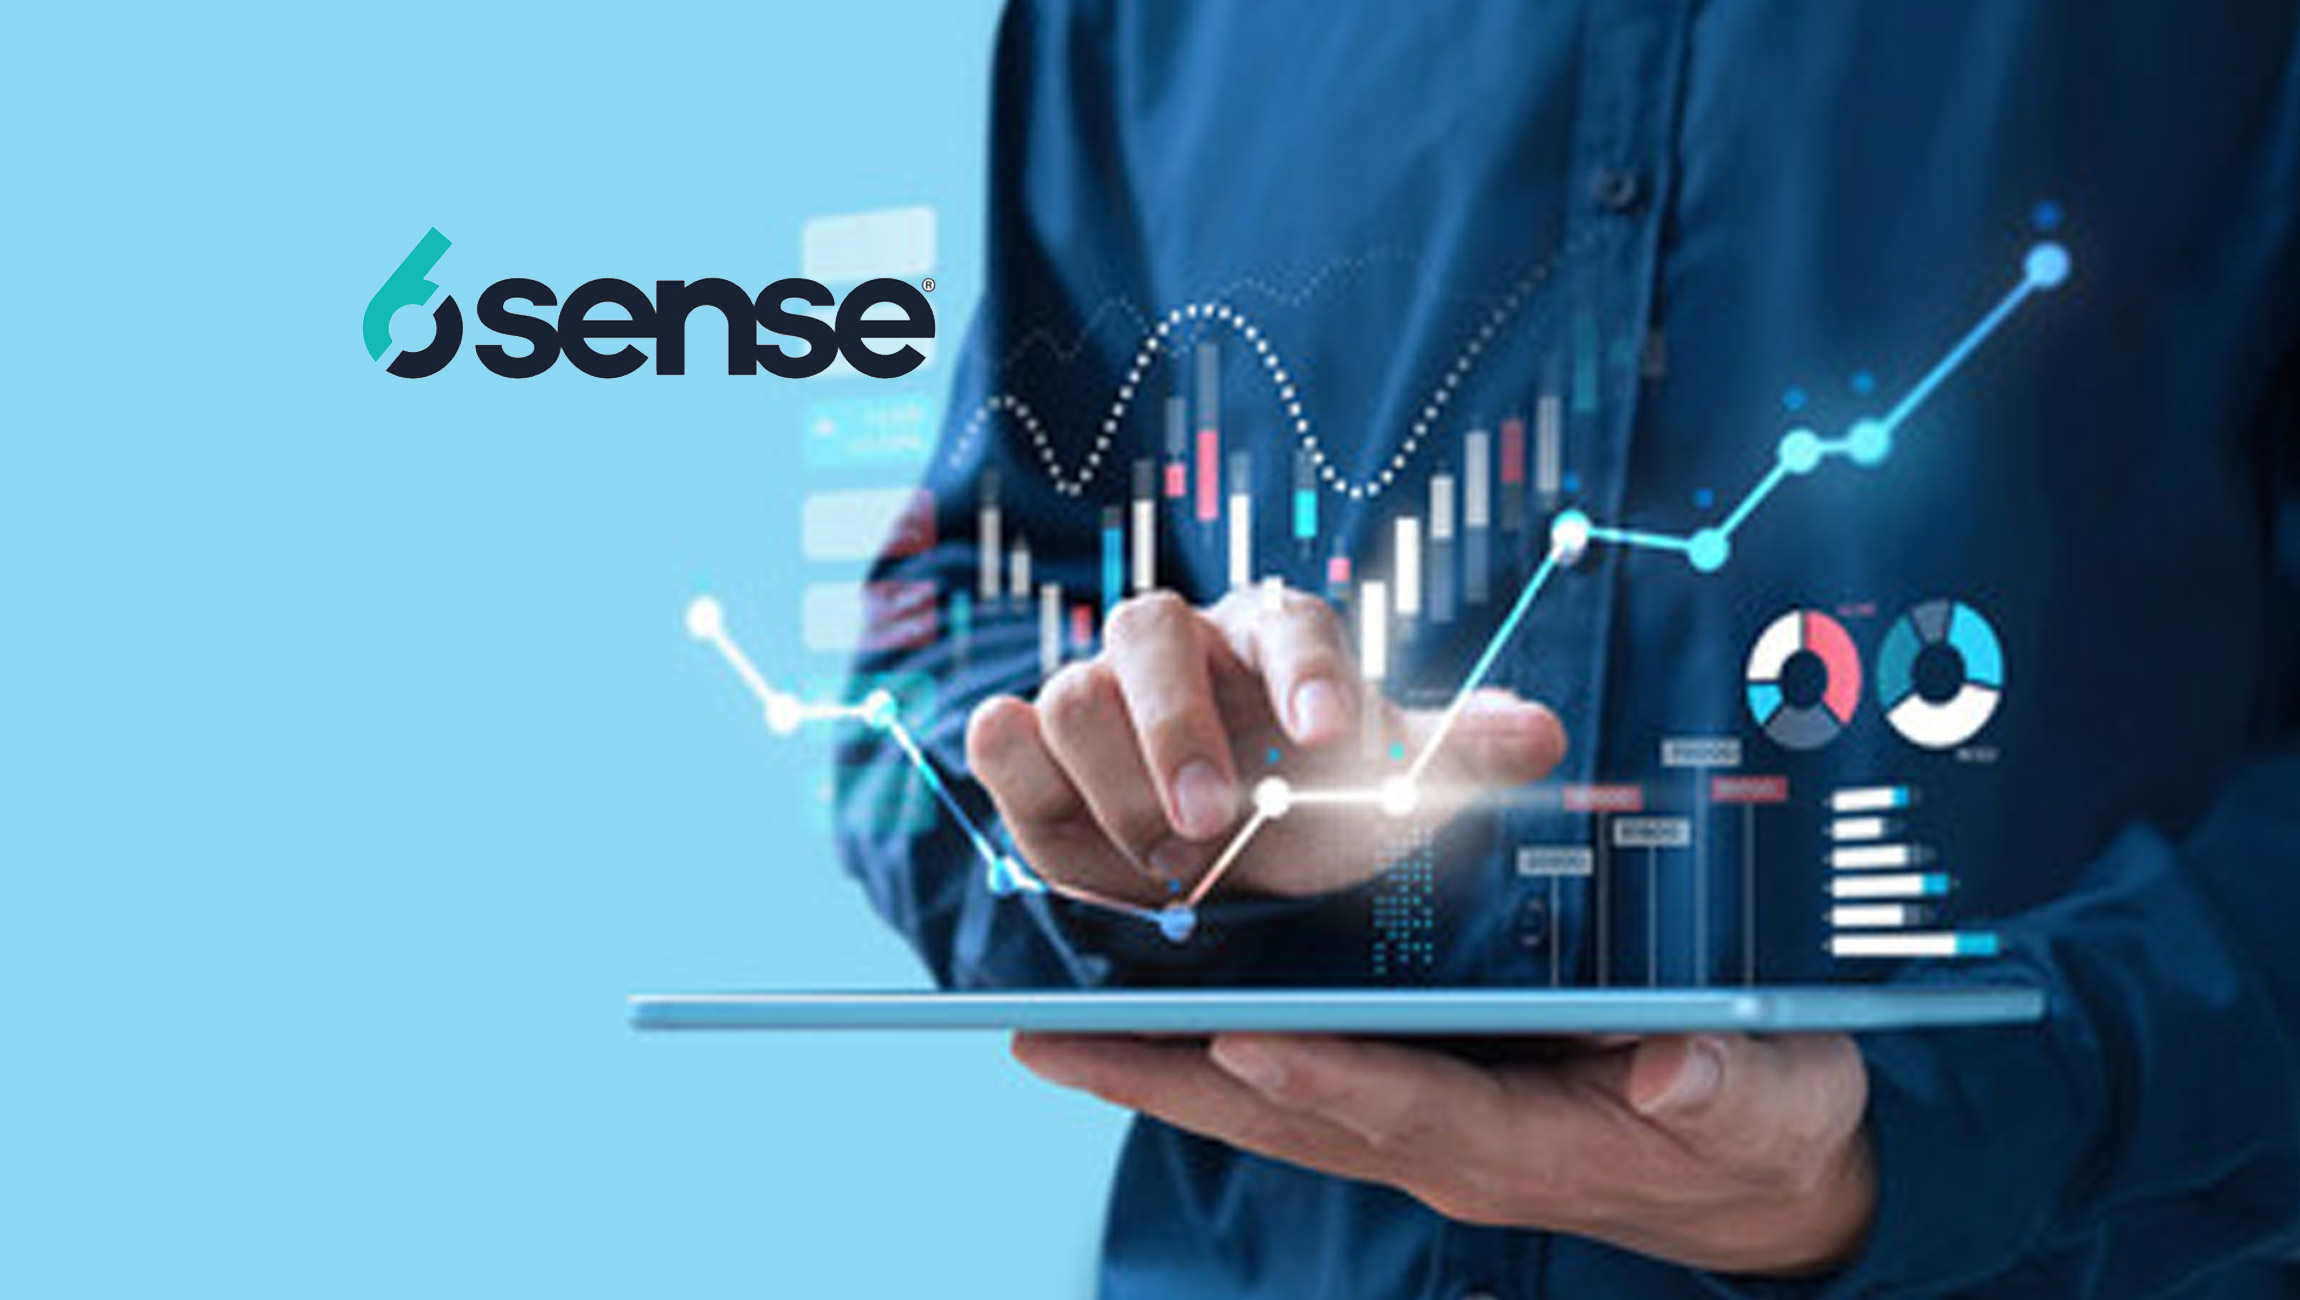 6sense - The Only ABM Platform Powered by Revenue AI™